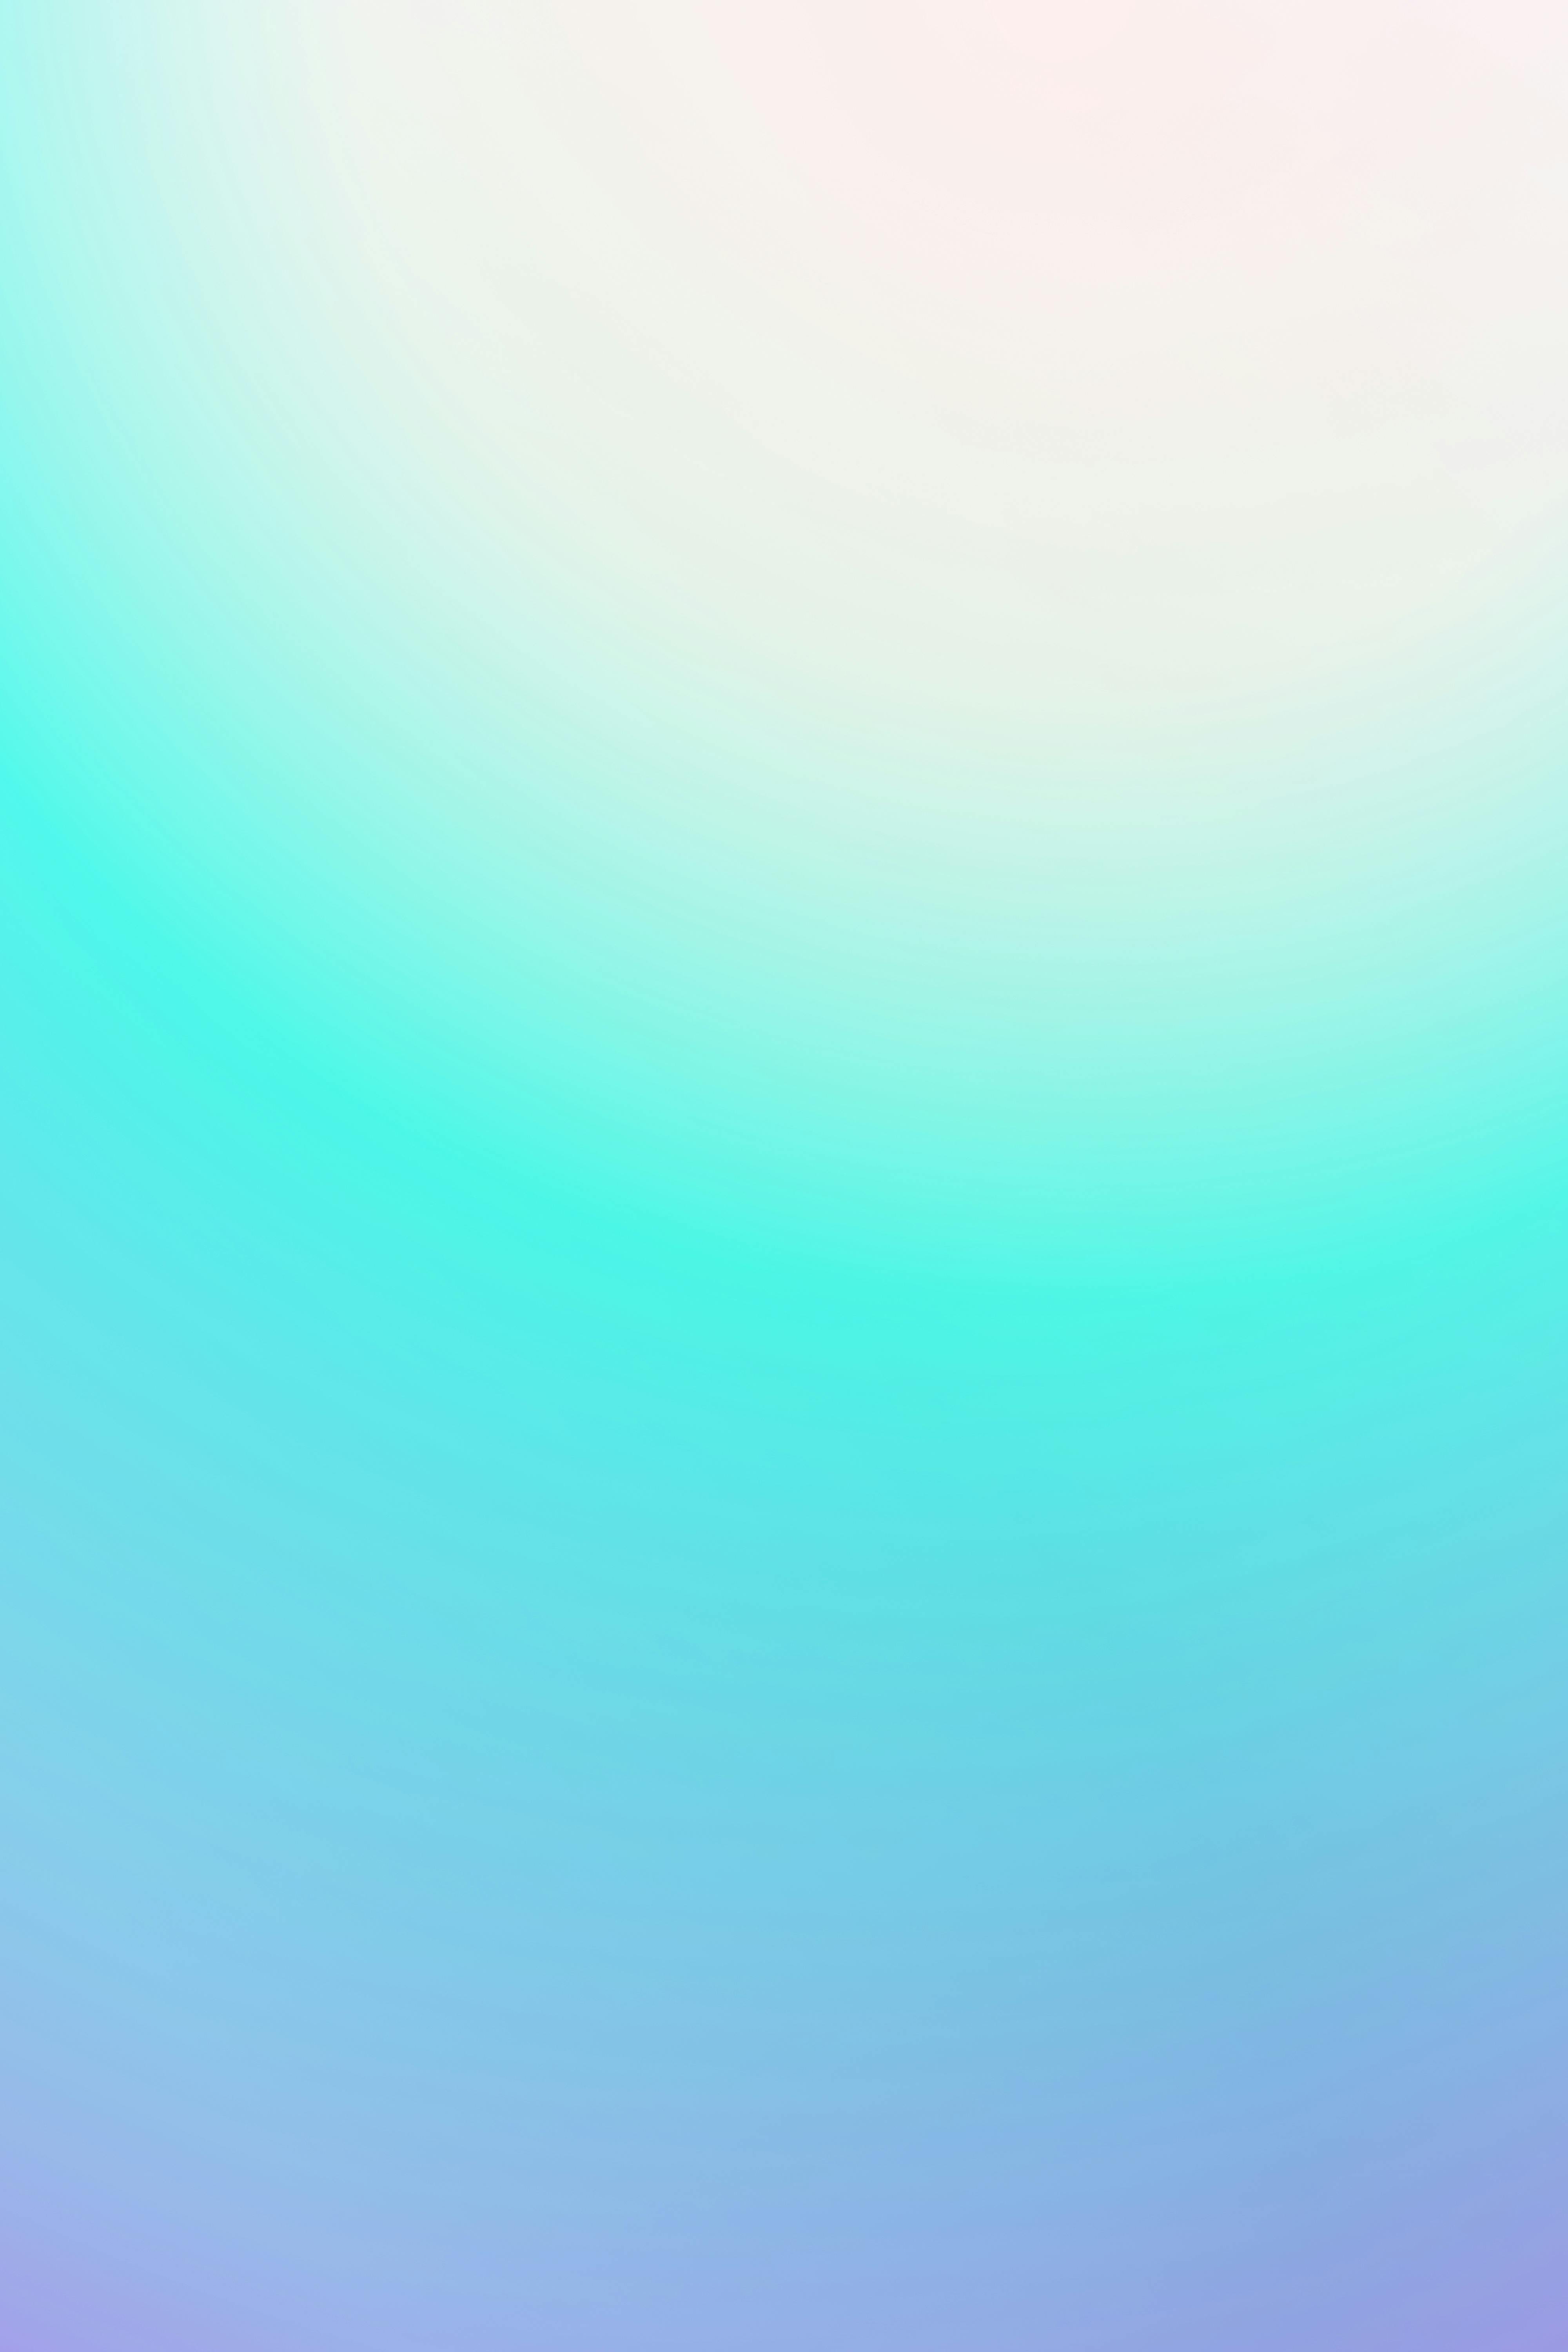 light blue gradient wallpaper